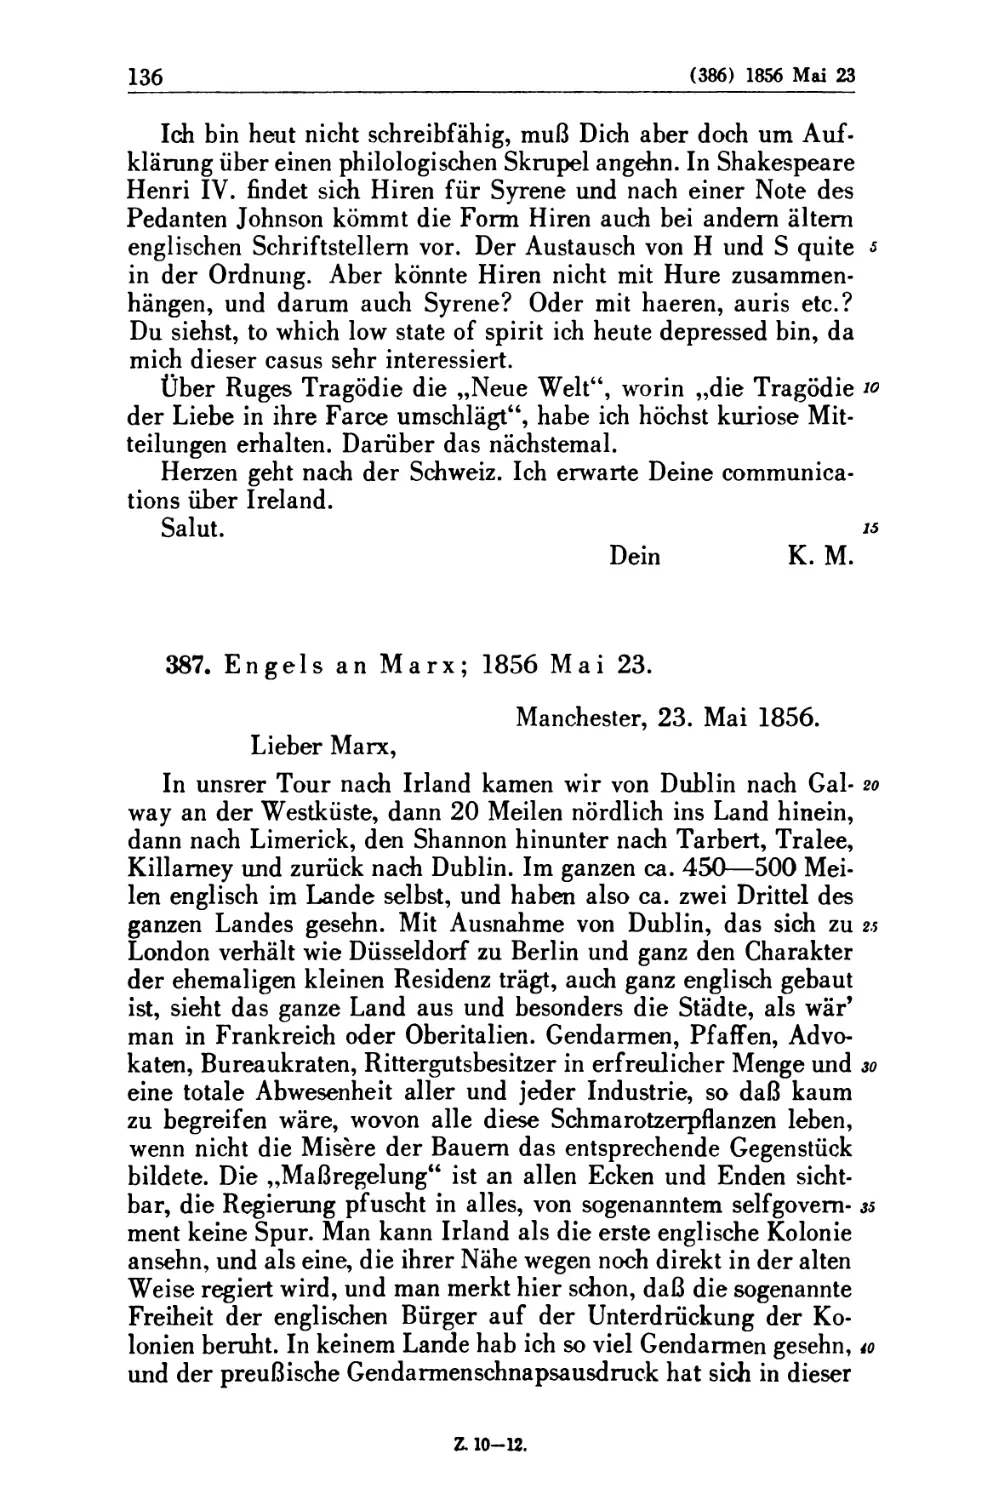 387. Engels an Marx; 1856 Mai 23